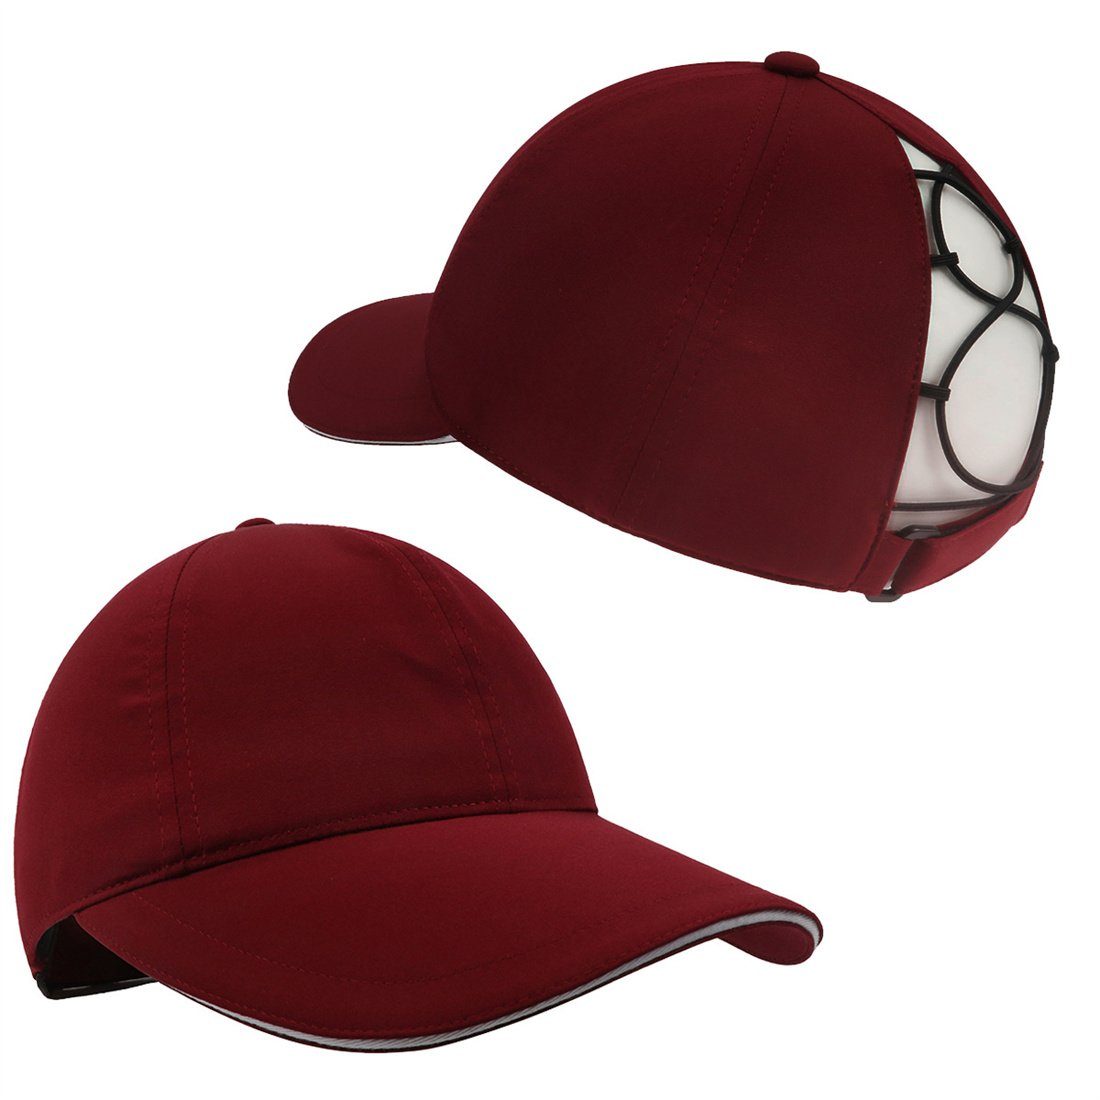 DÖRÖY Baseball Cap Outdoor-Baseballkappe für Frauen,schnell trocknende Kappe,Sonnenblende Rot | Baseball Caps